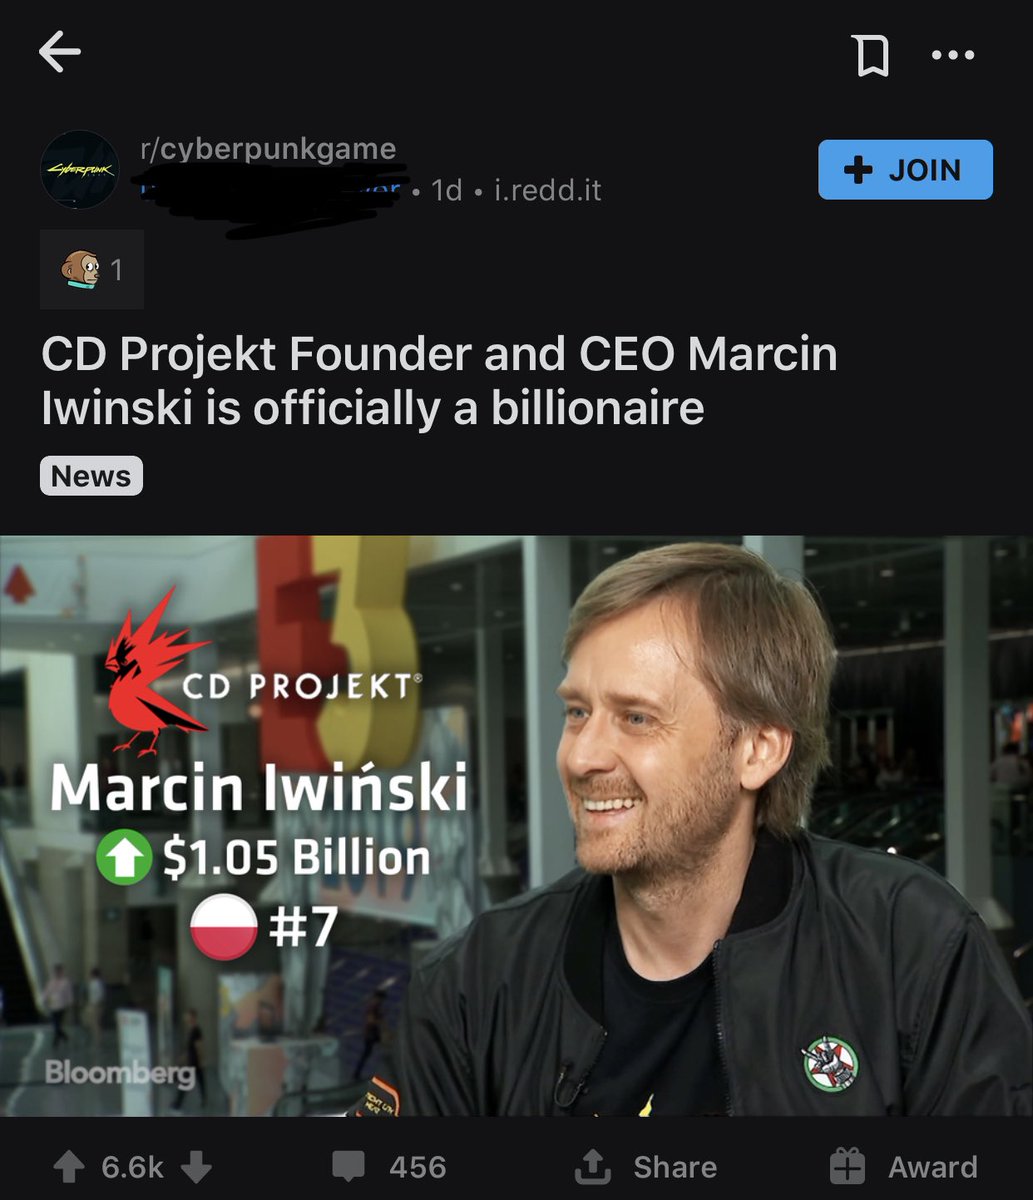 Cyberpunk subreddit celebrates someone becoming a billionaire